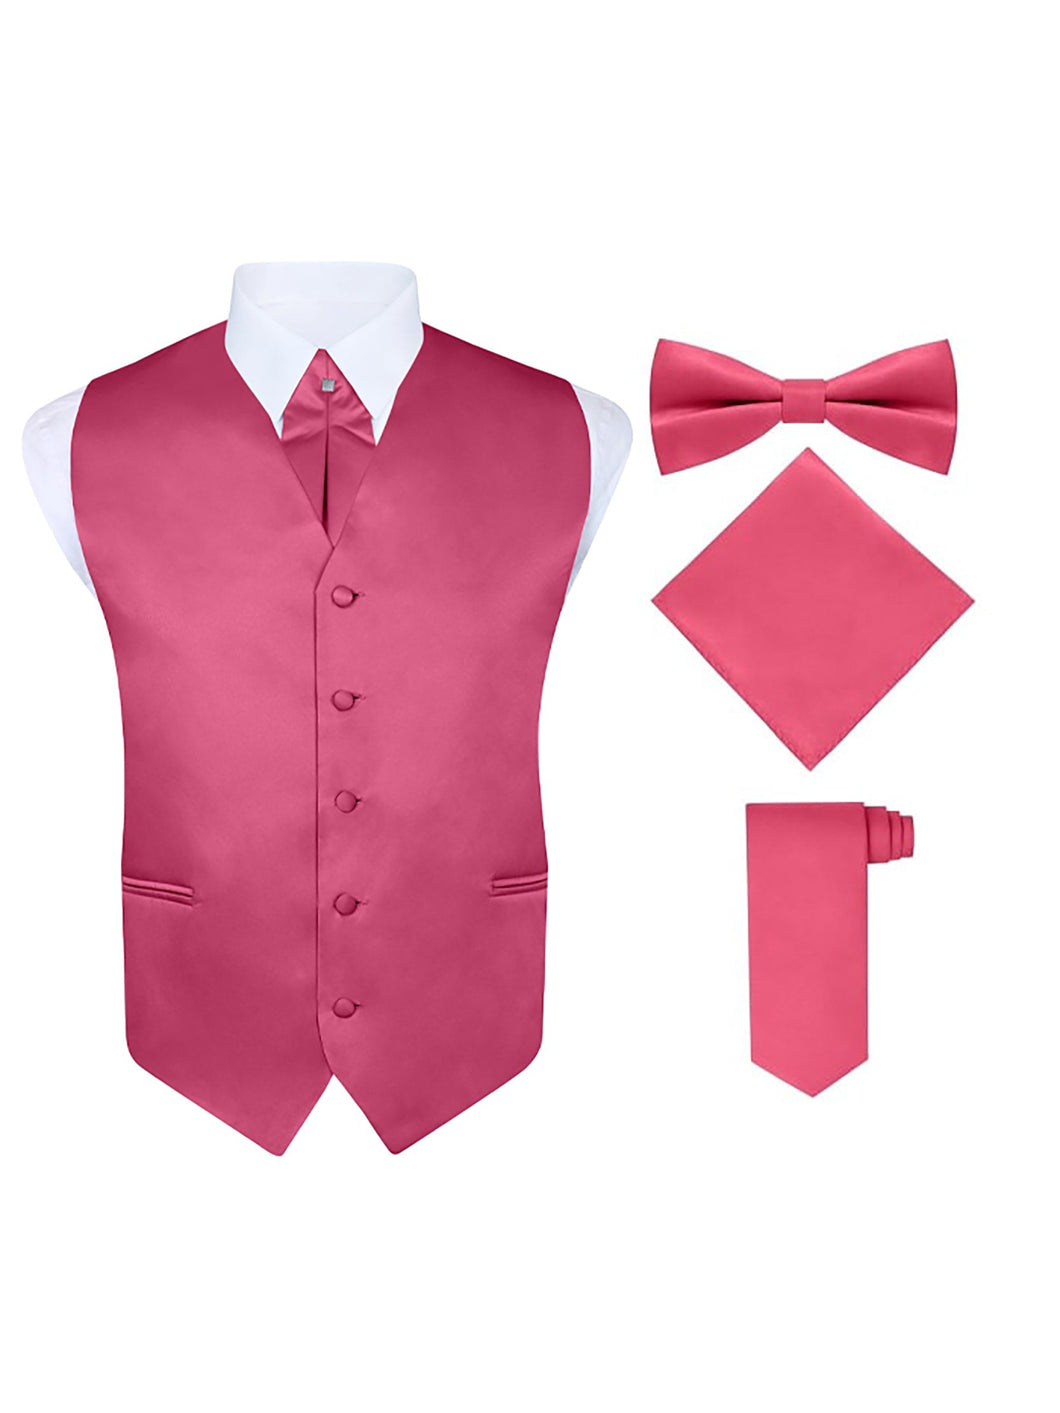 S.H. Churchill & Co. Men's 5 Piece Vest Set, with Cravat, Bow Tie, Neck Tie & Pocket Hanky-Hot Pink